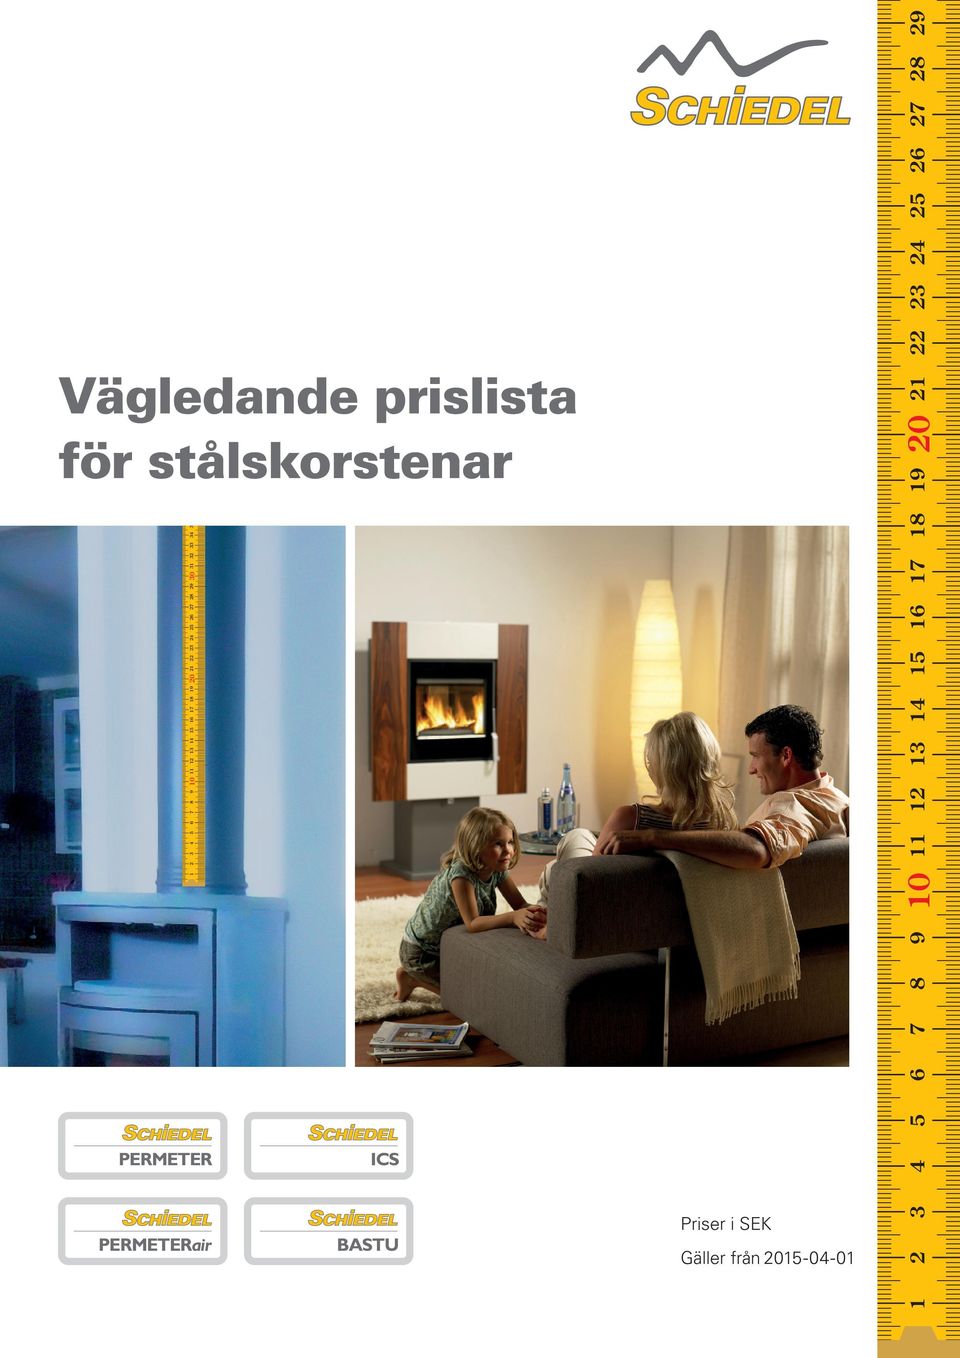 38 39 40 PERMETER ICS PERMETERair BASTU Priser i SEK Gäller från 15-04-01